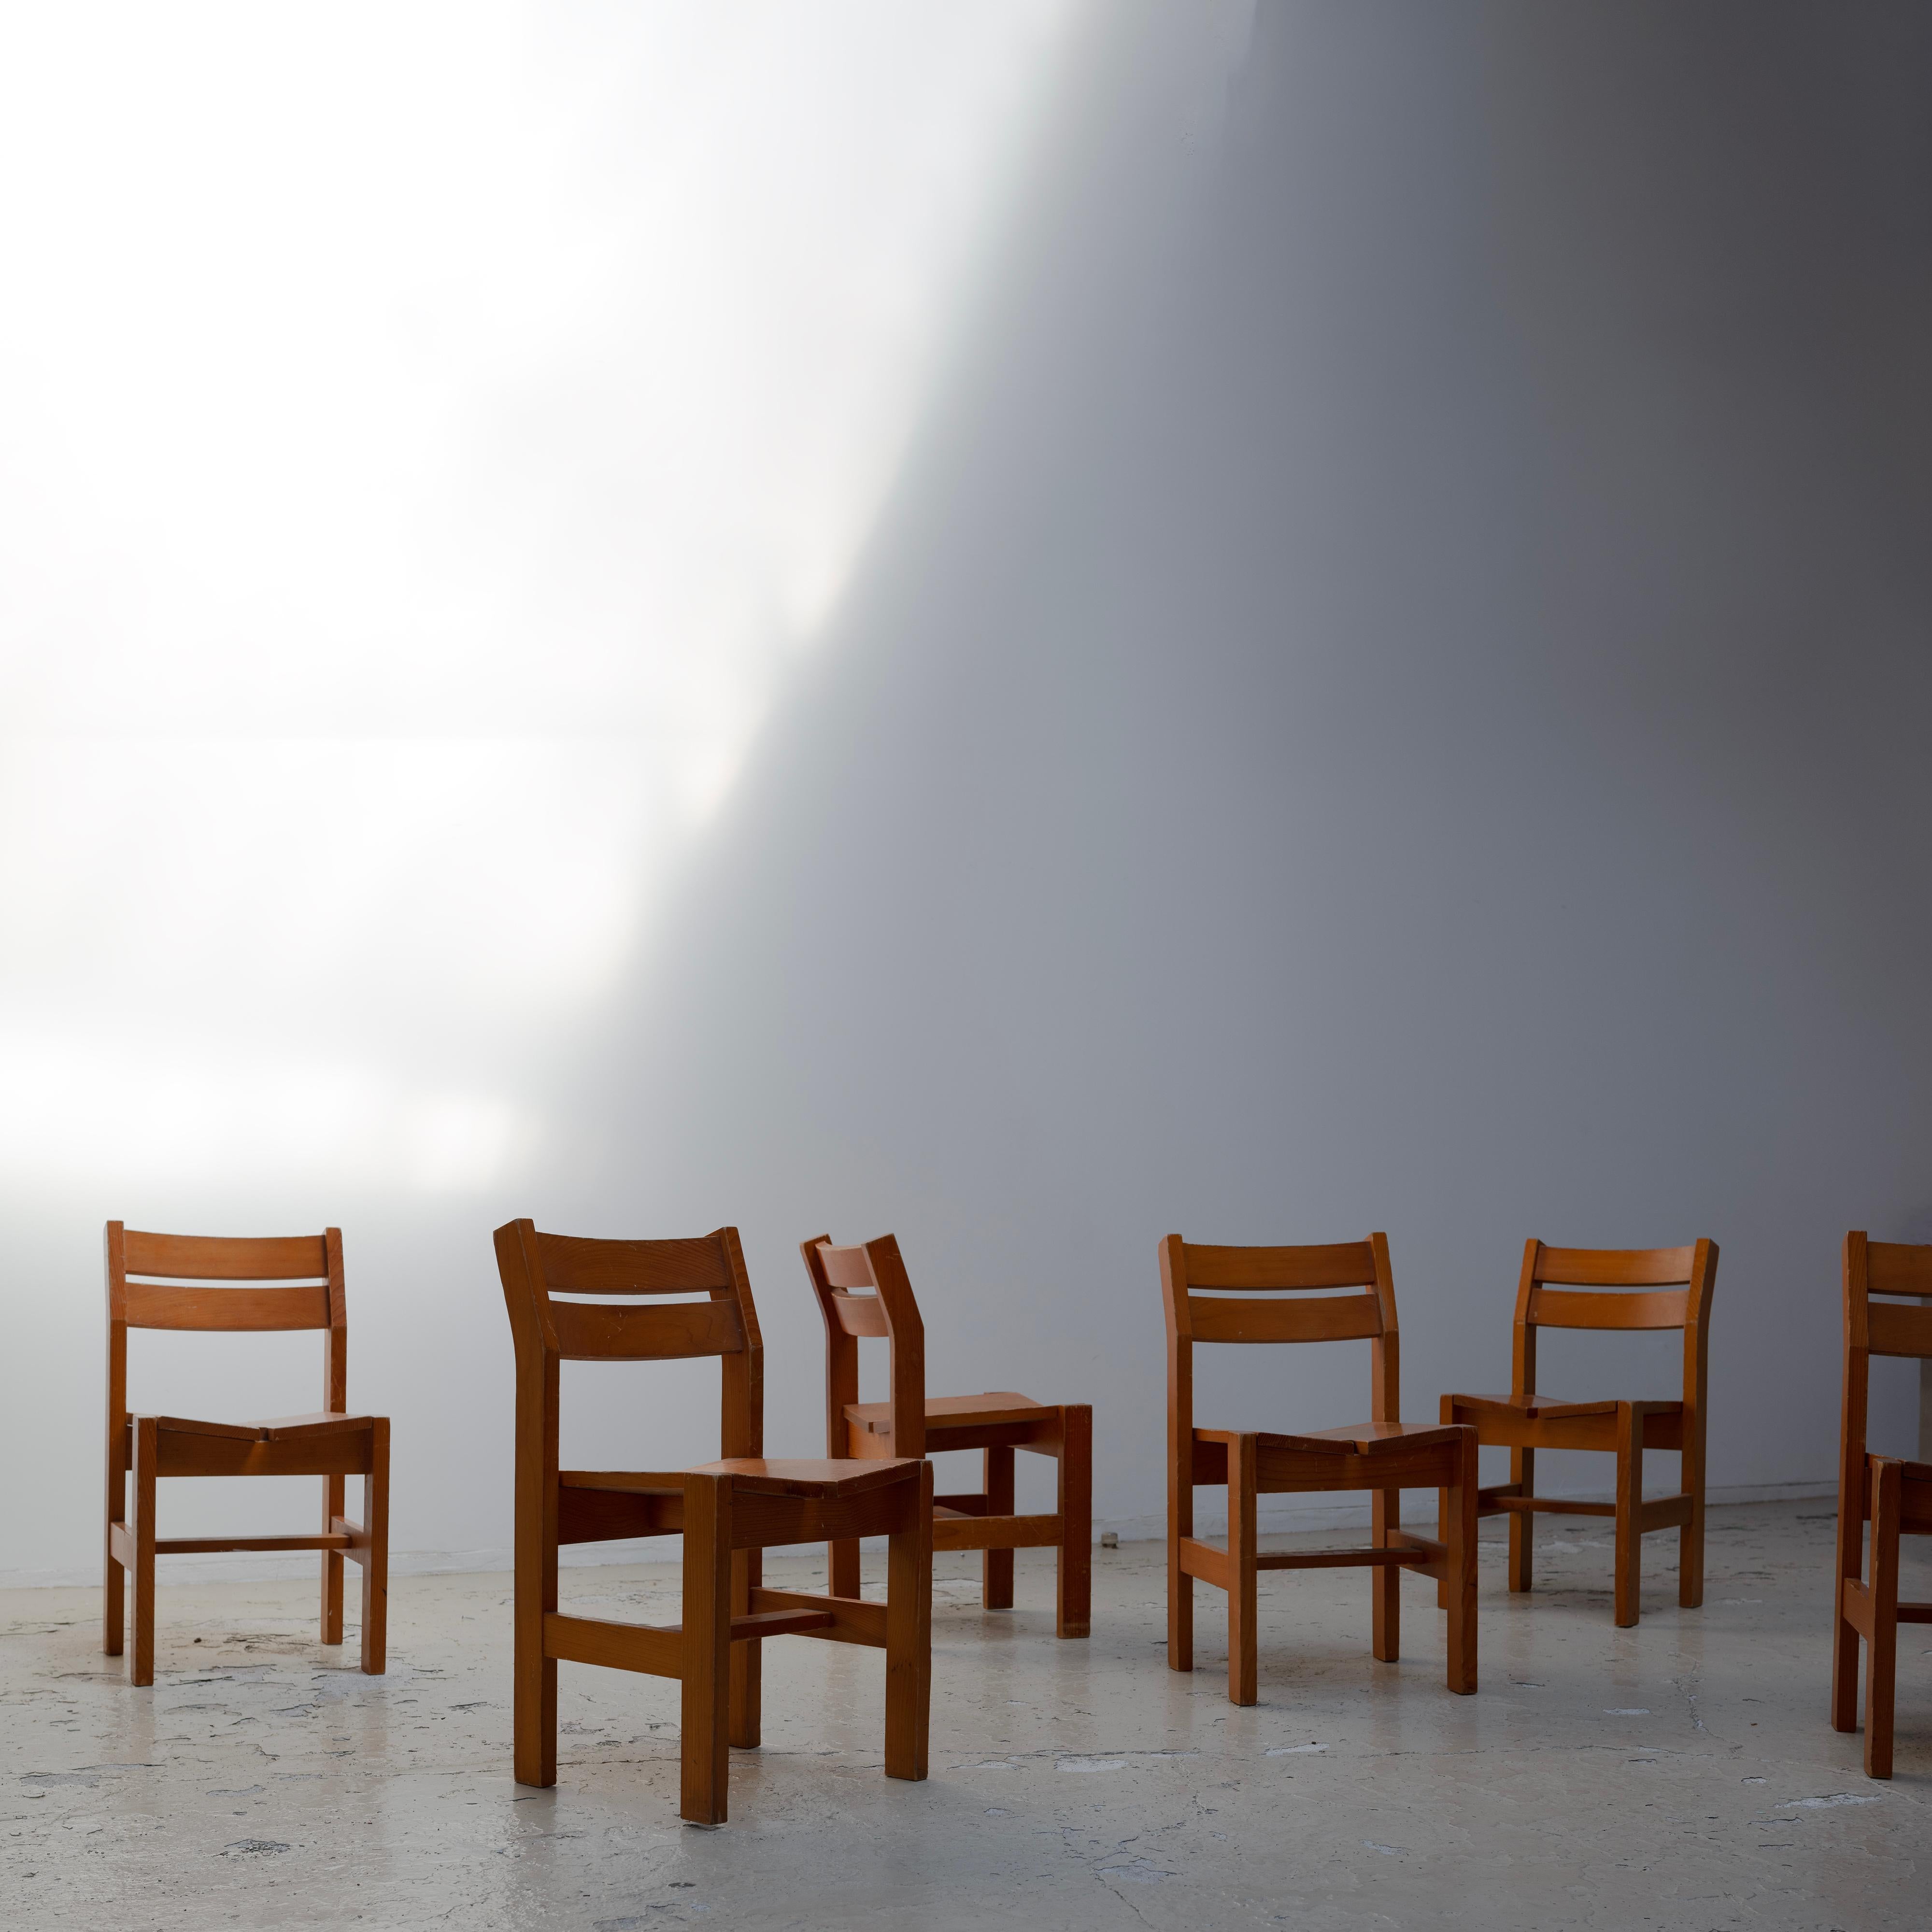 1980s , Chairs from Les Arcs , Manufactured Maison Regain
6piece set